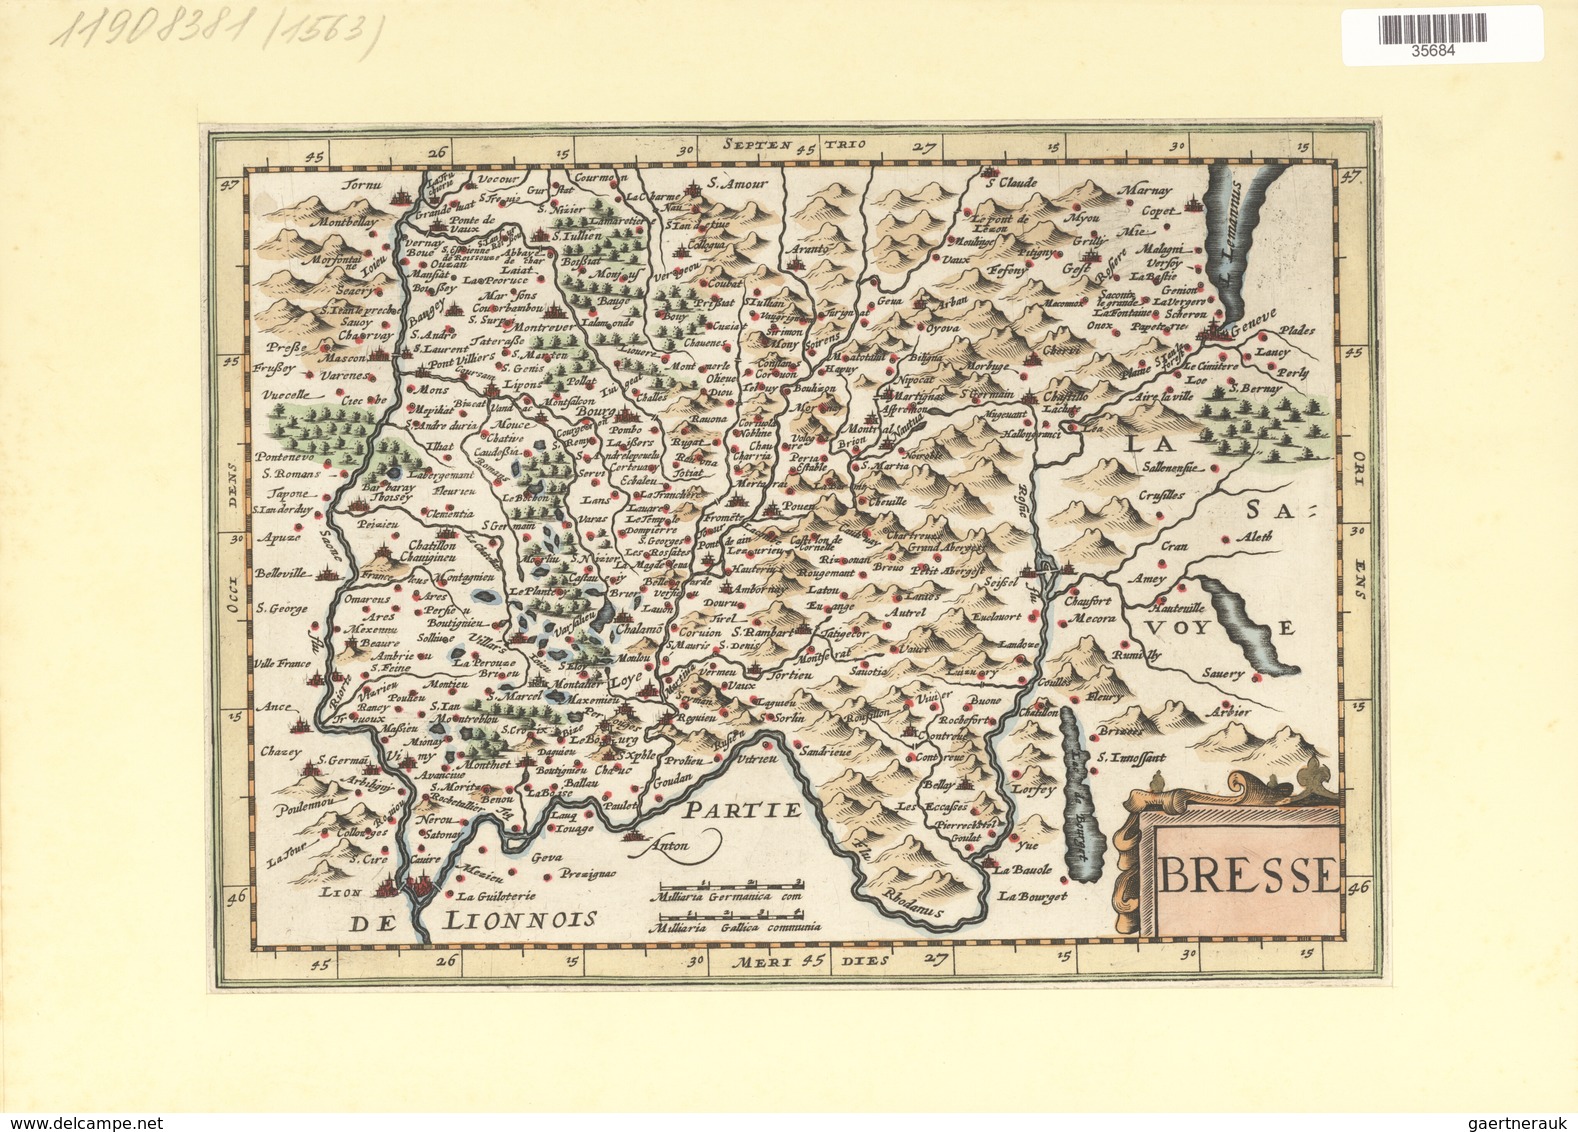 Landkarten Und Stiche: 1734. Map Of Bresse Region Of France Up To Lac Lemans In Switzerland. From Th - Geographie